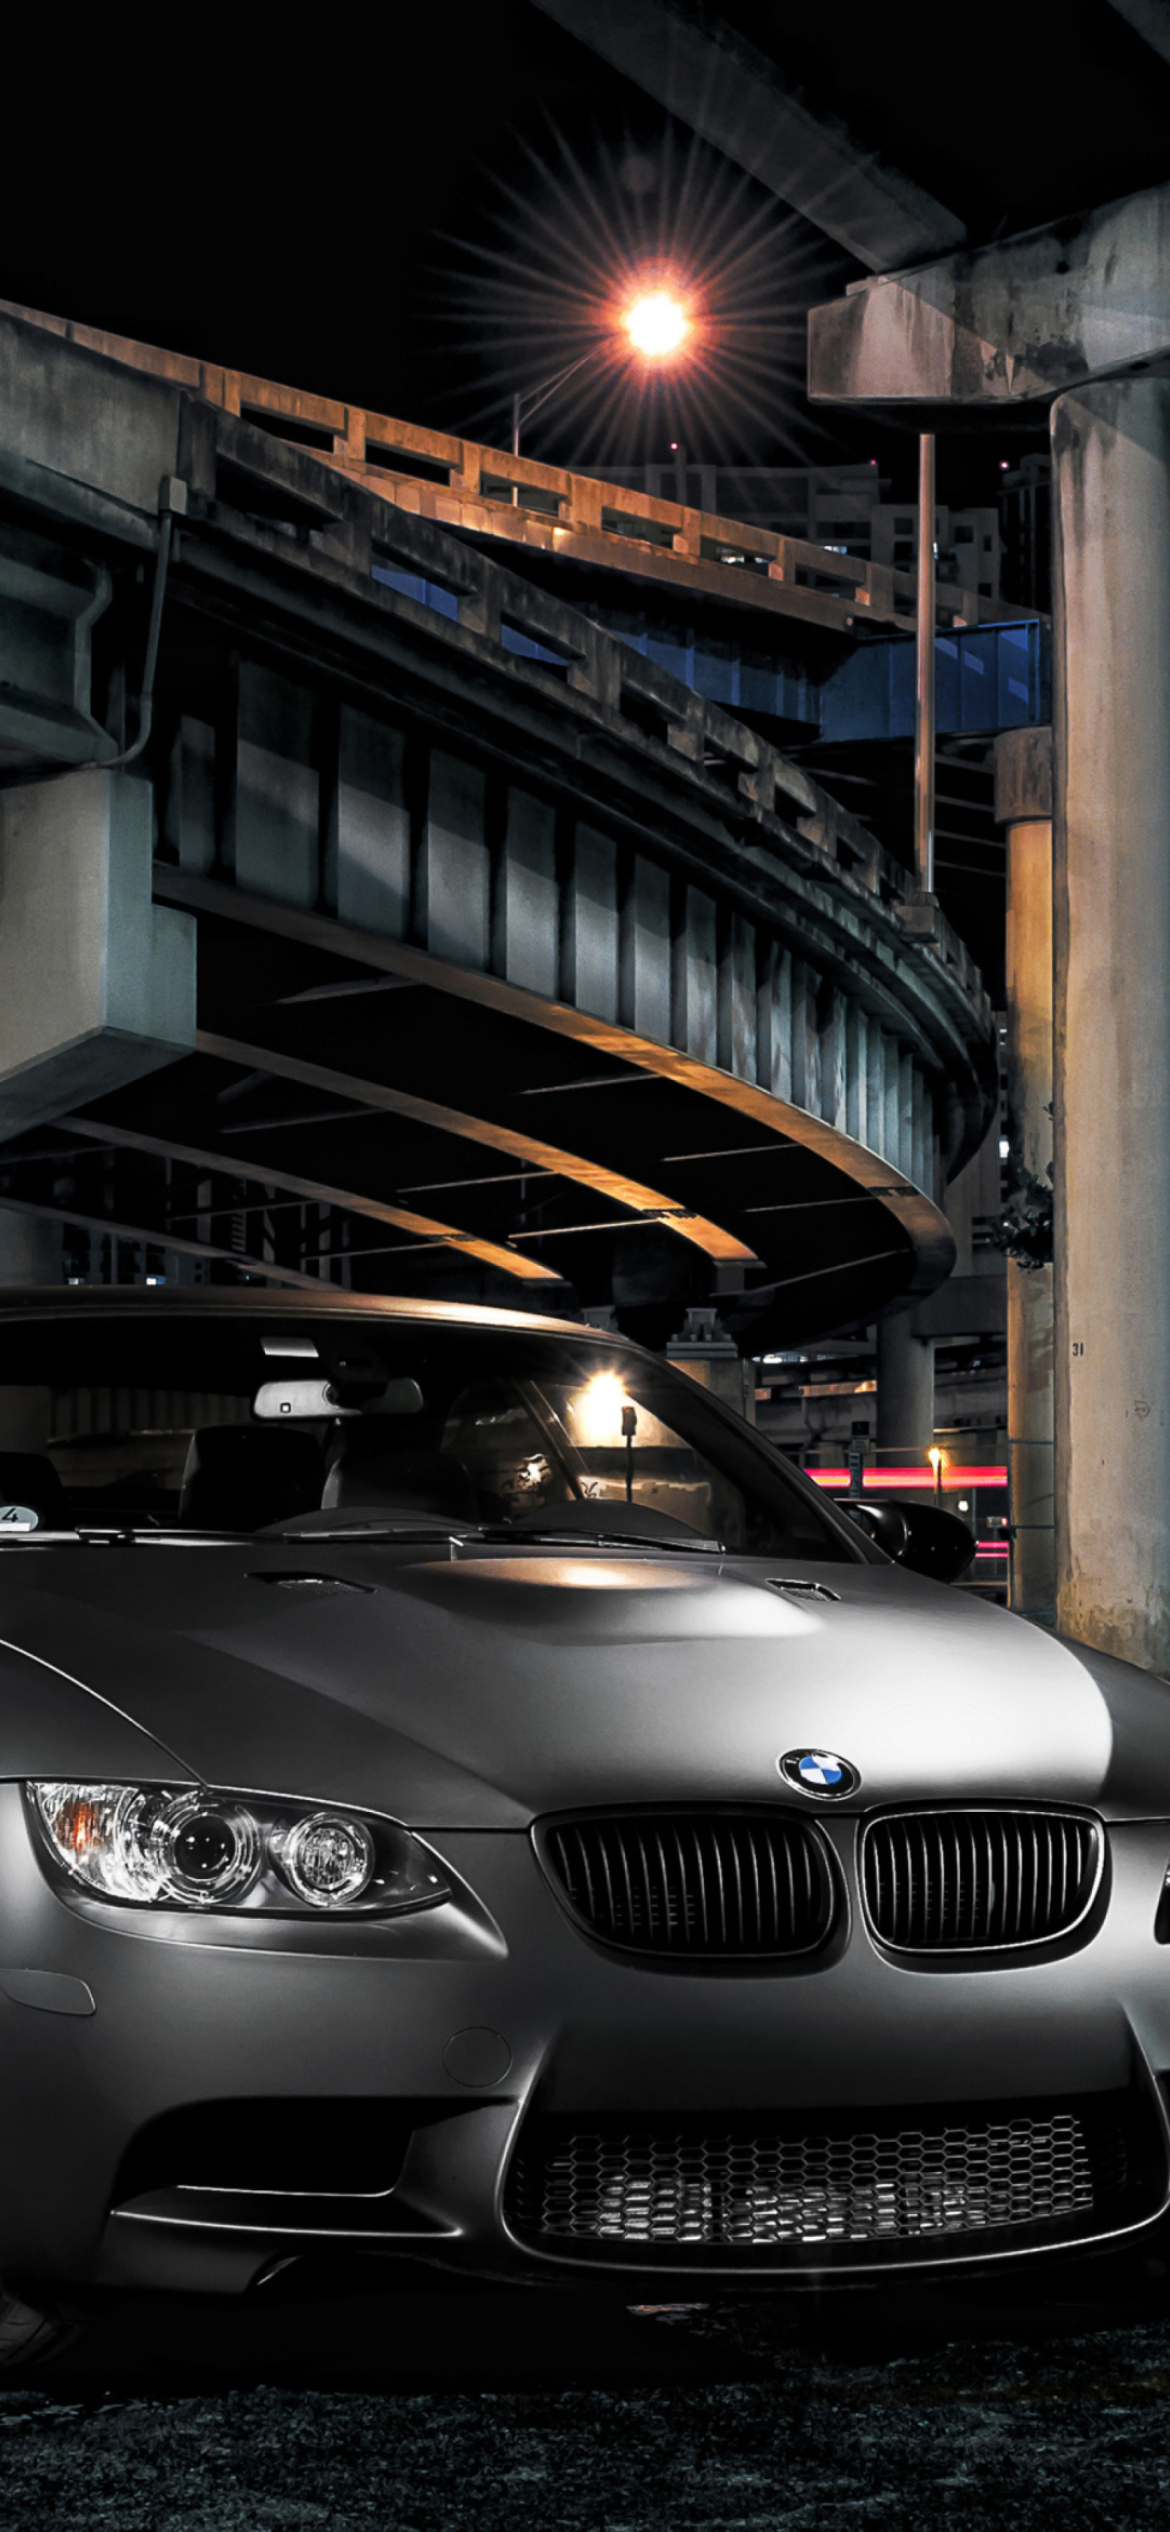 BMW Coupe wallpaper 1170x2532